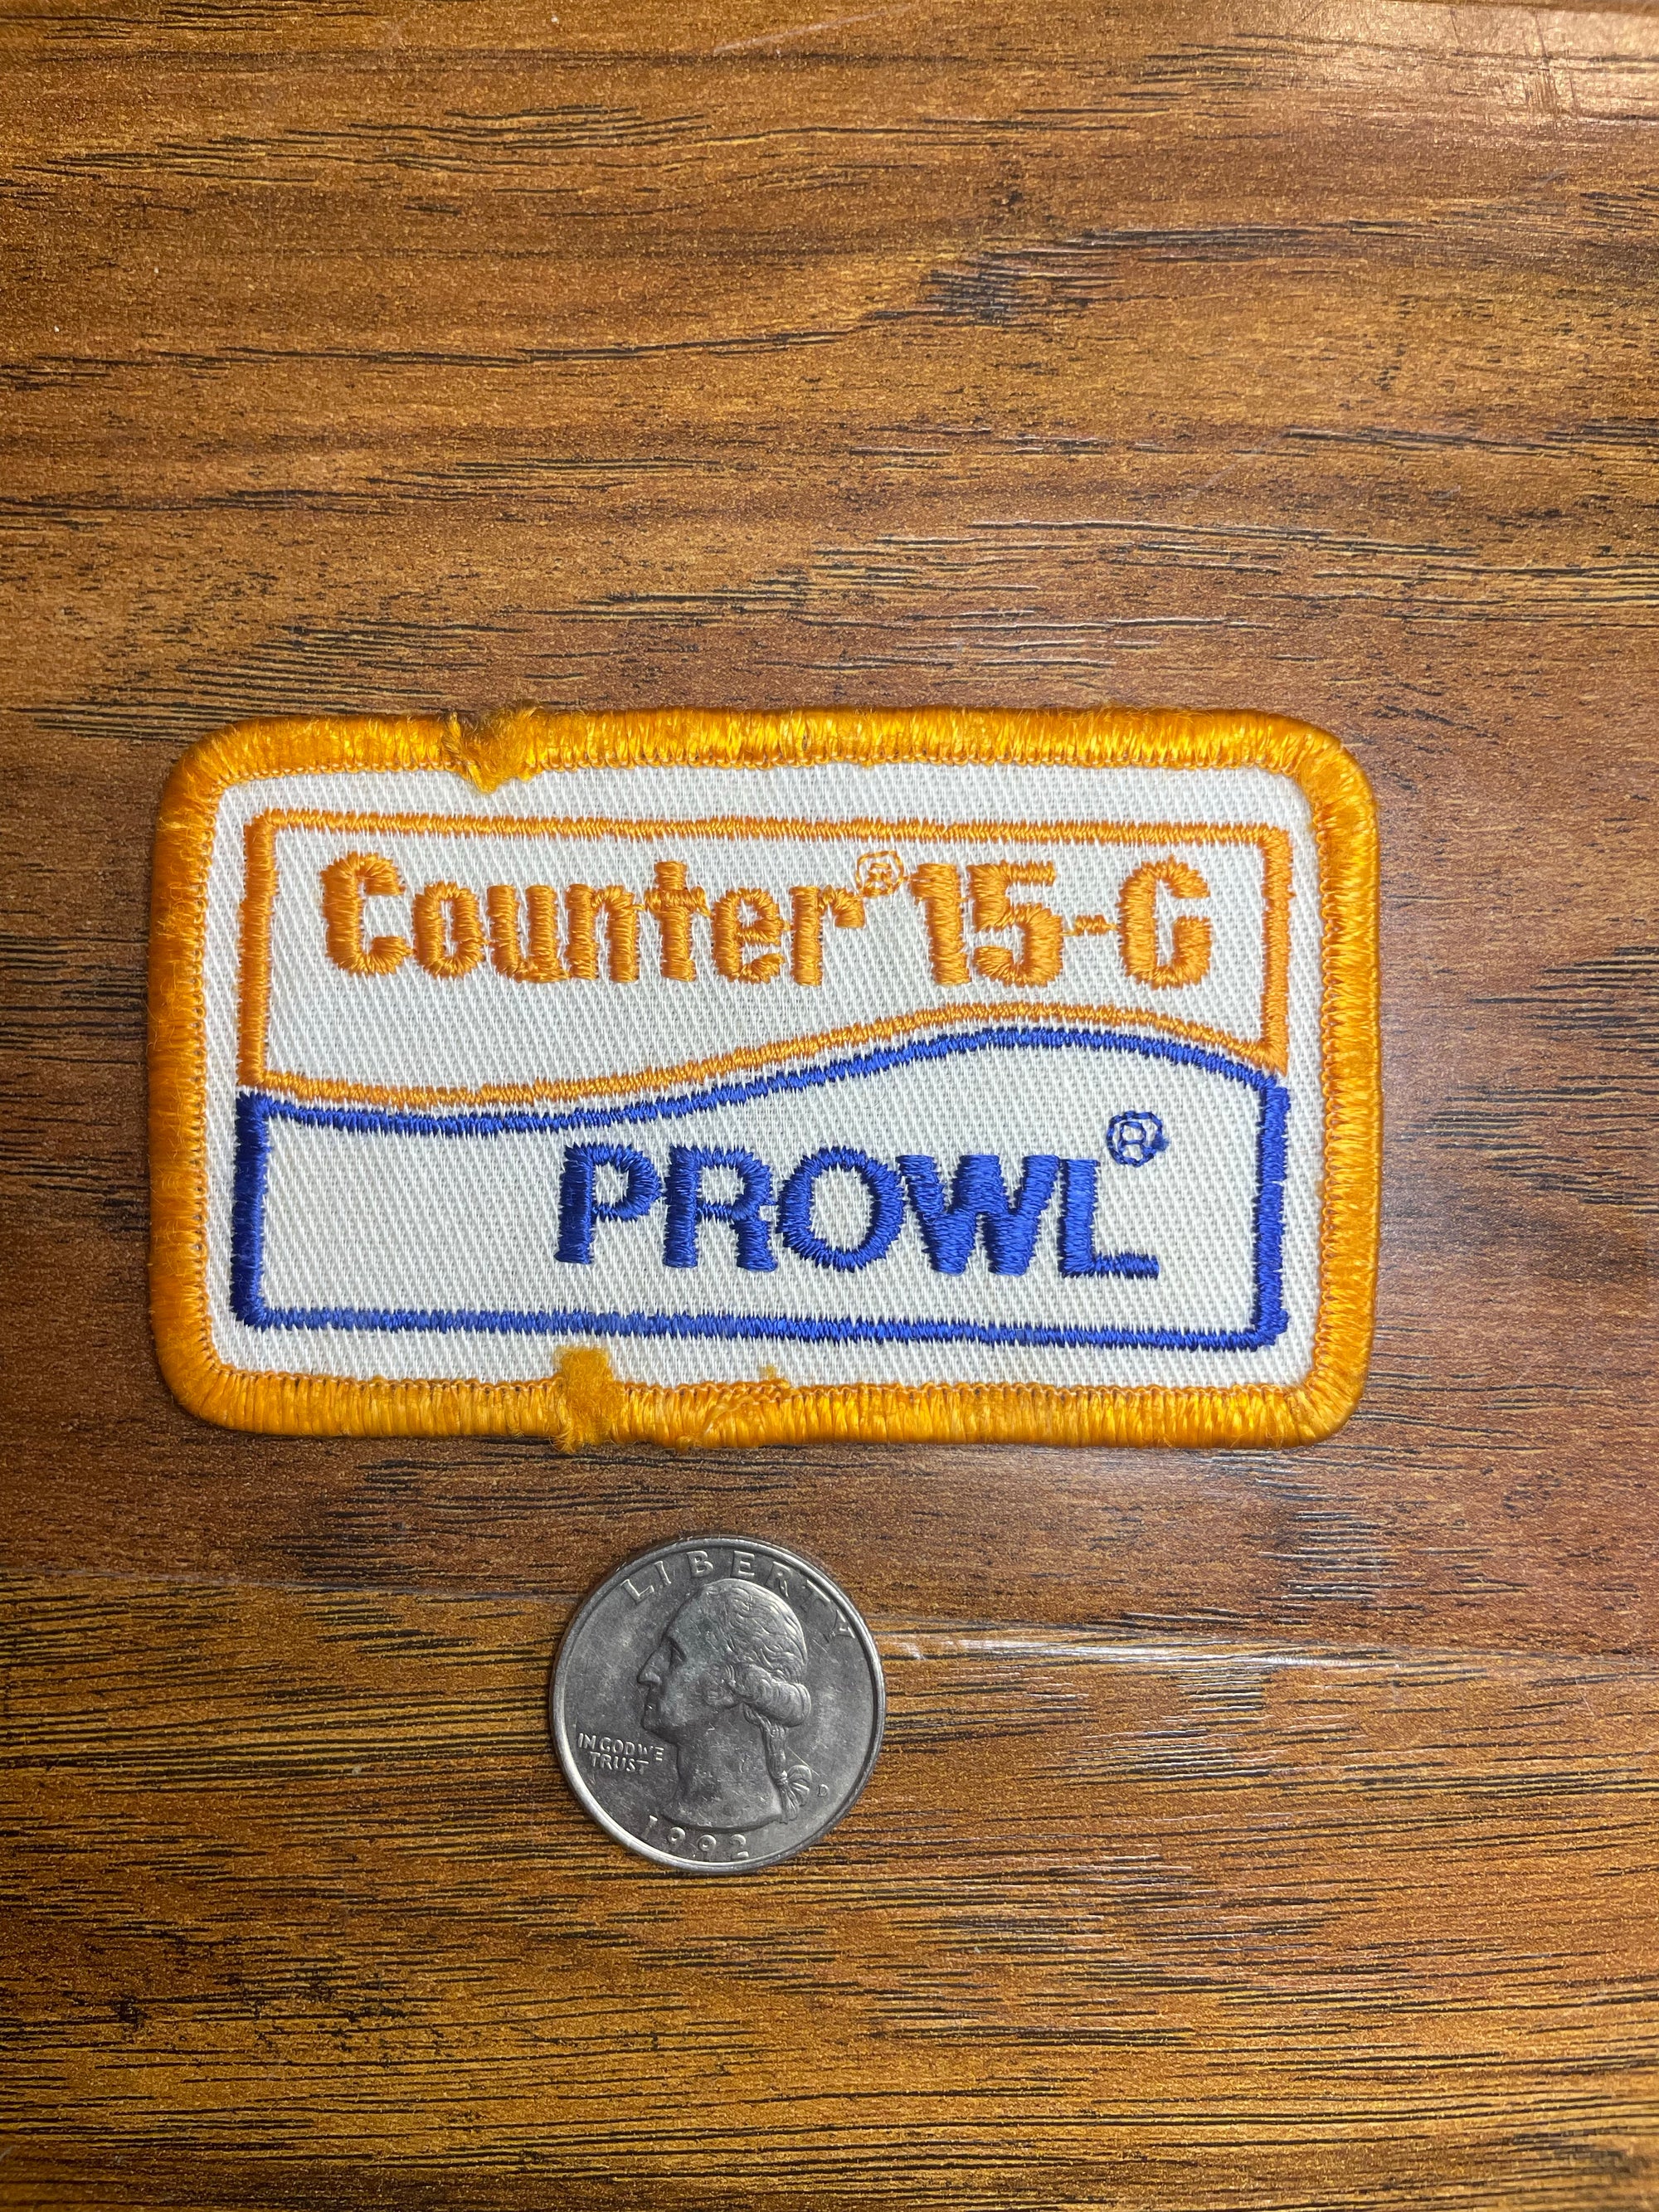 Vintage Counter 15-C Prowl